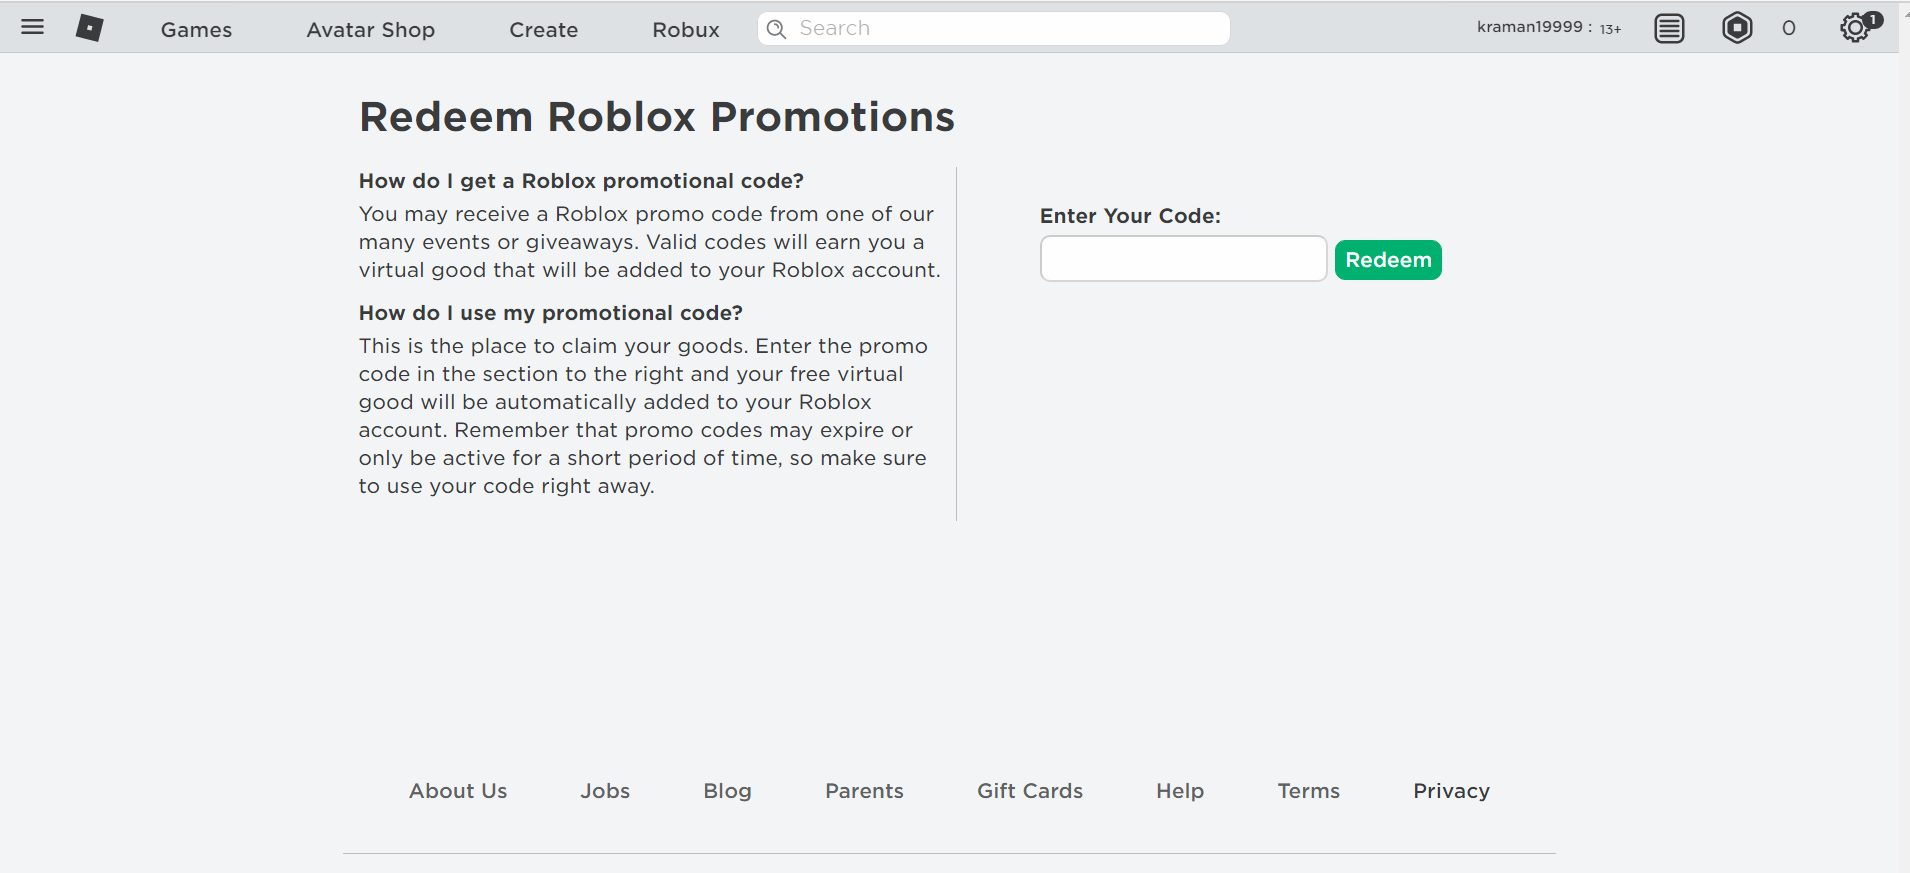 Roblox Promo code. Redeem Roblox codes. Redeem Roblox promotions. Redeem Roblox promocodes. Your best event